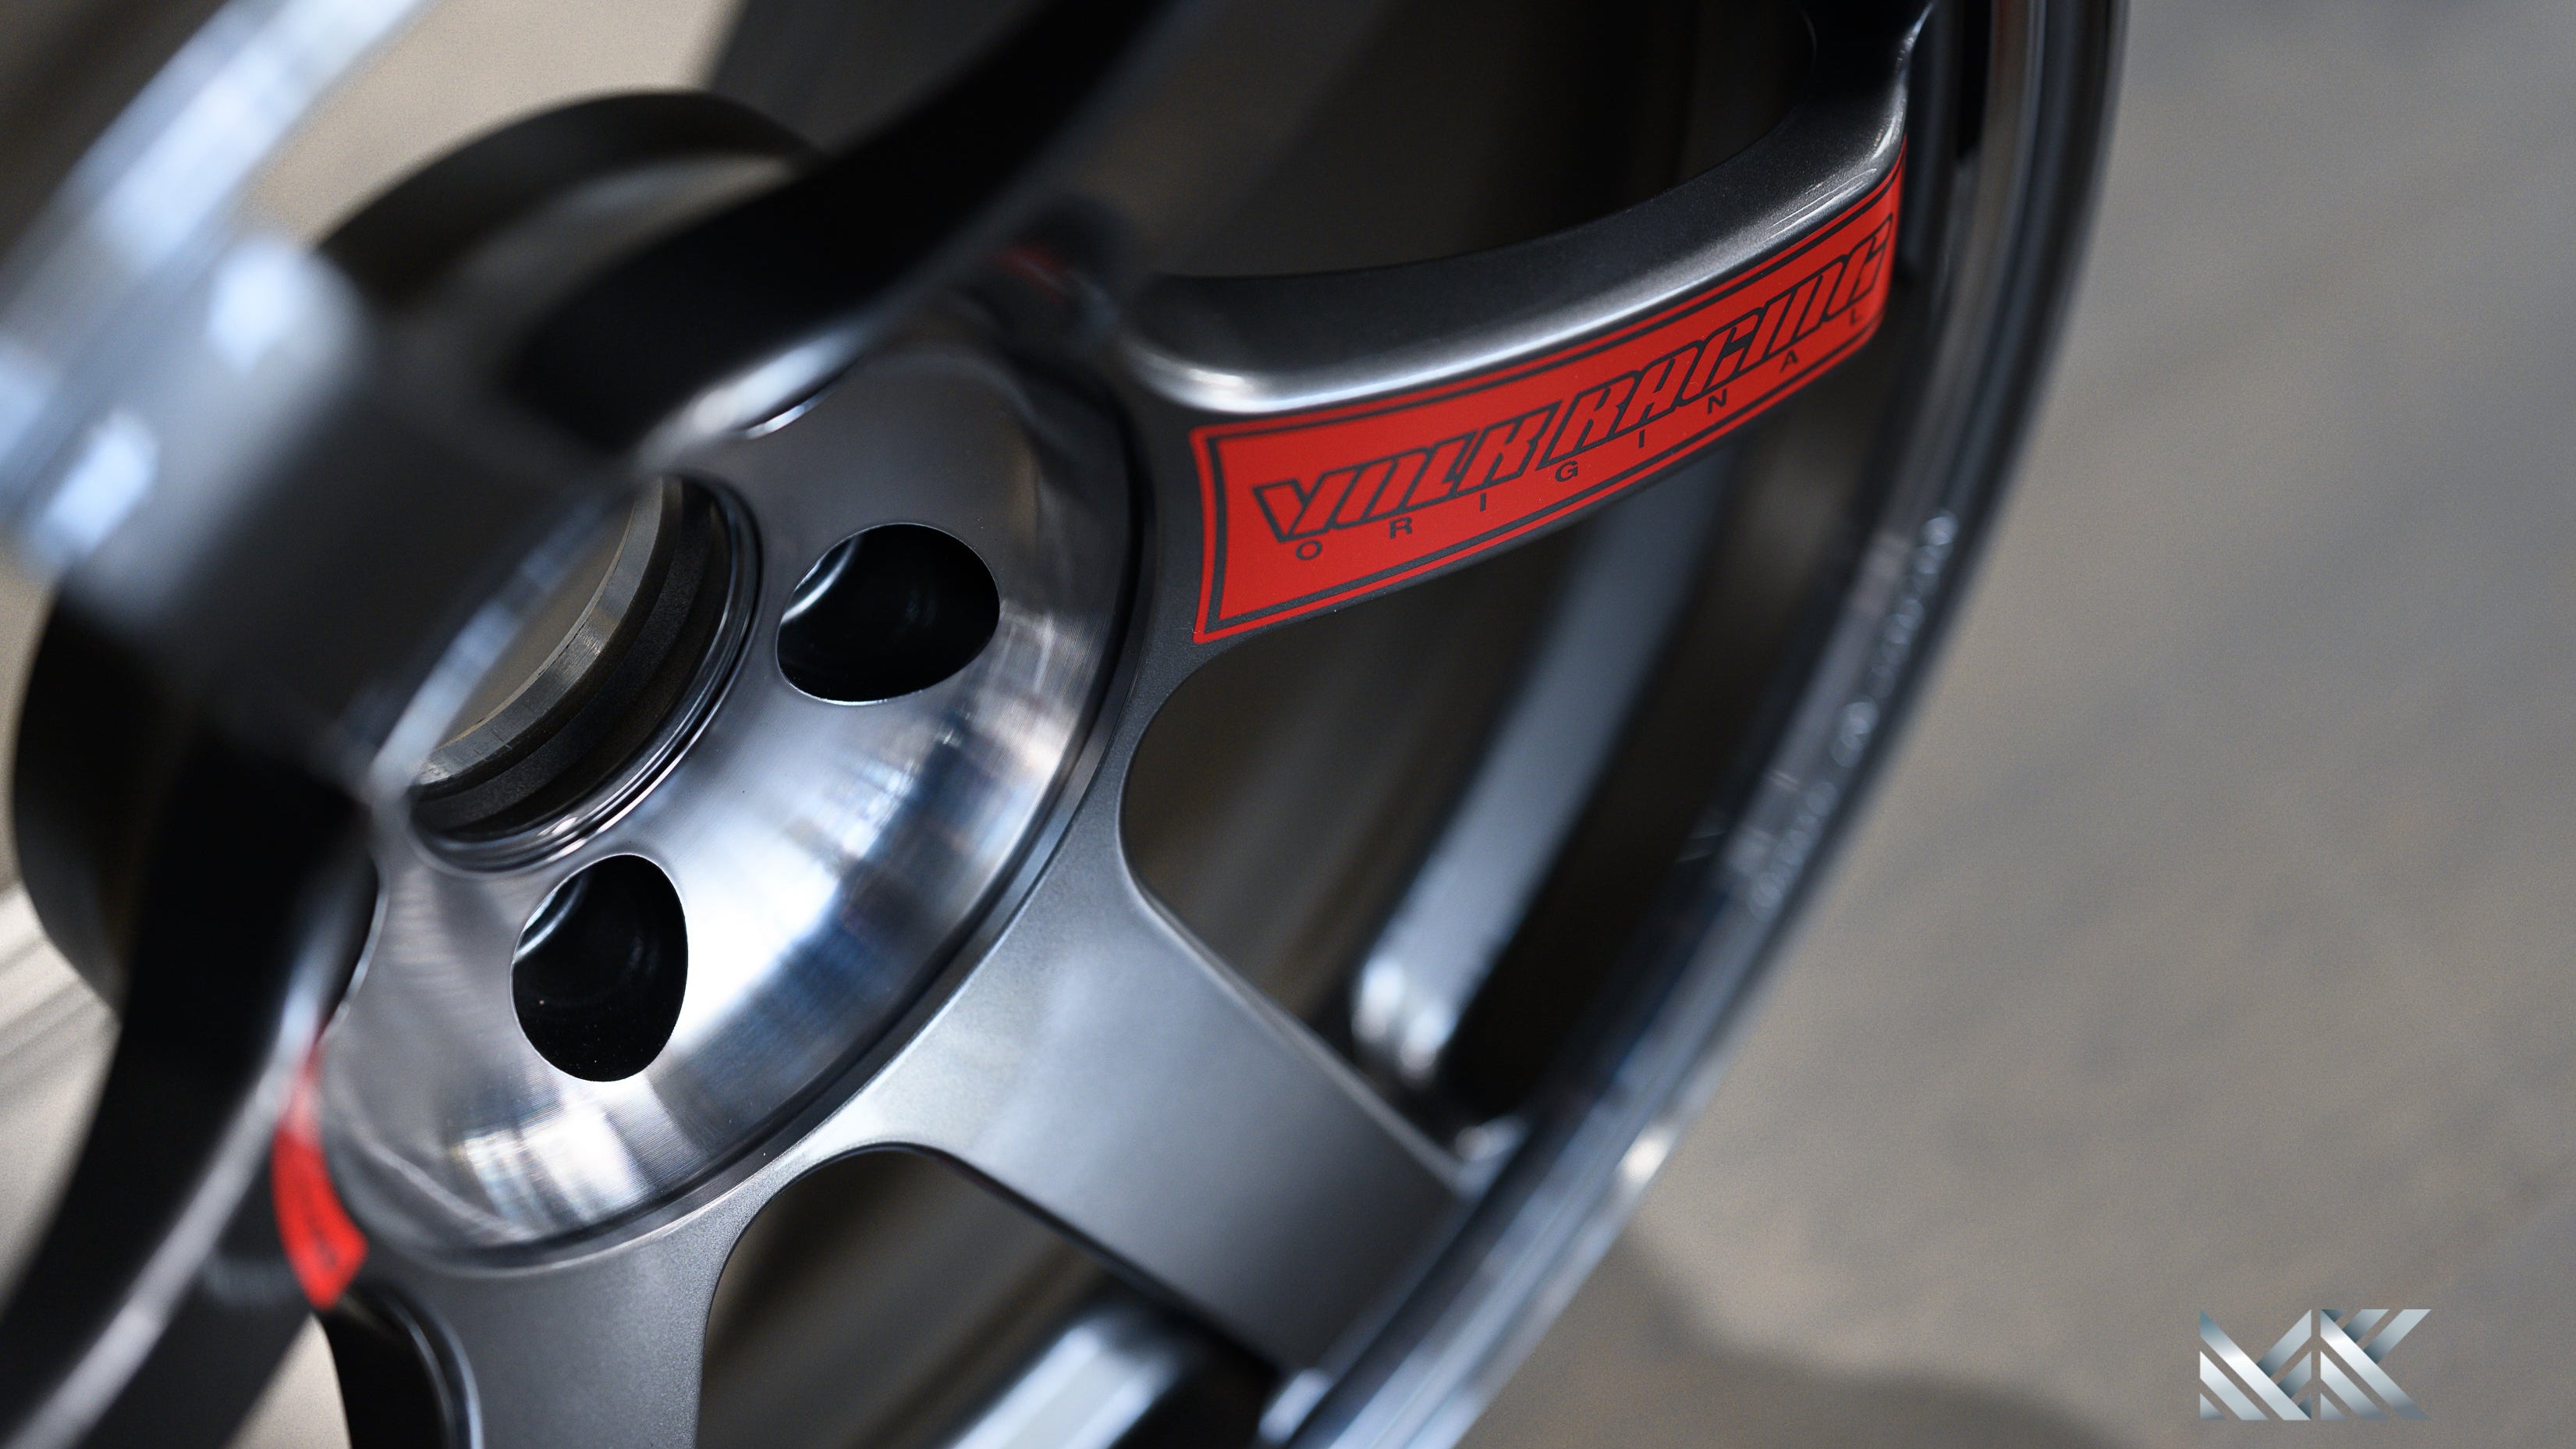 Volk Racing TE37Saga SL for M2 - Premium Wheels from Volk Racing - From just $3950.0! Shop now at MK MOTORSPORTS